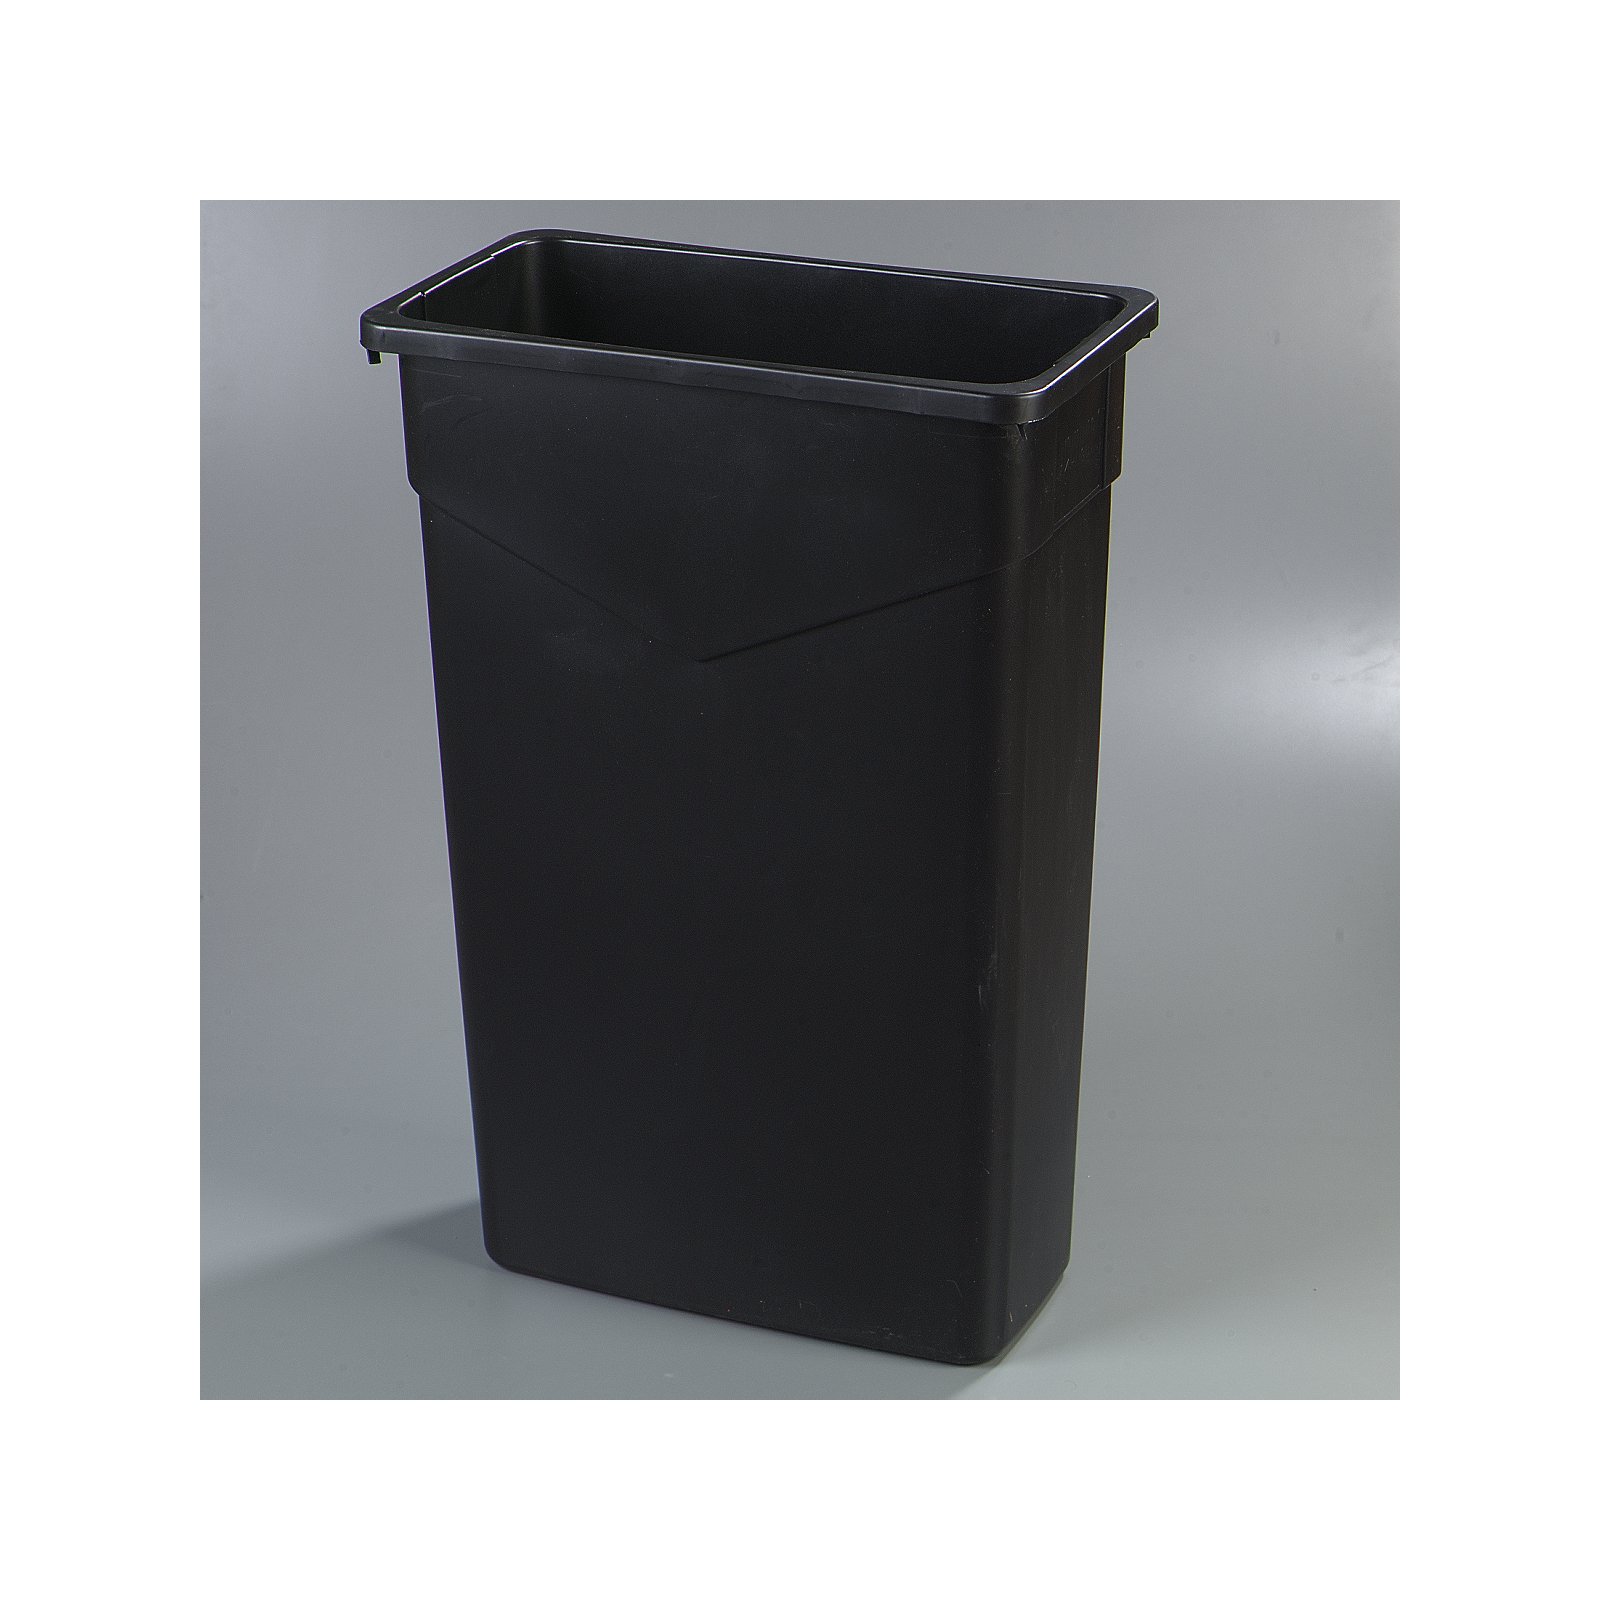 34202303 - TrimLine™ Rectangle Waste Container 23 Gallon - Black